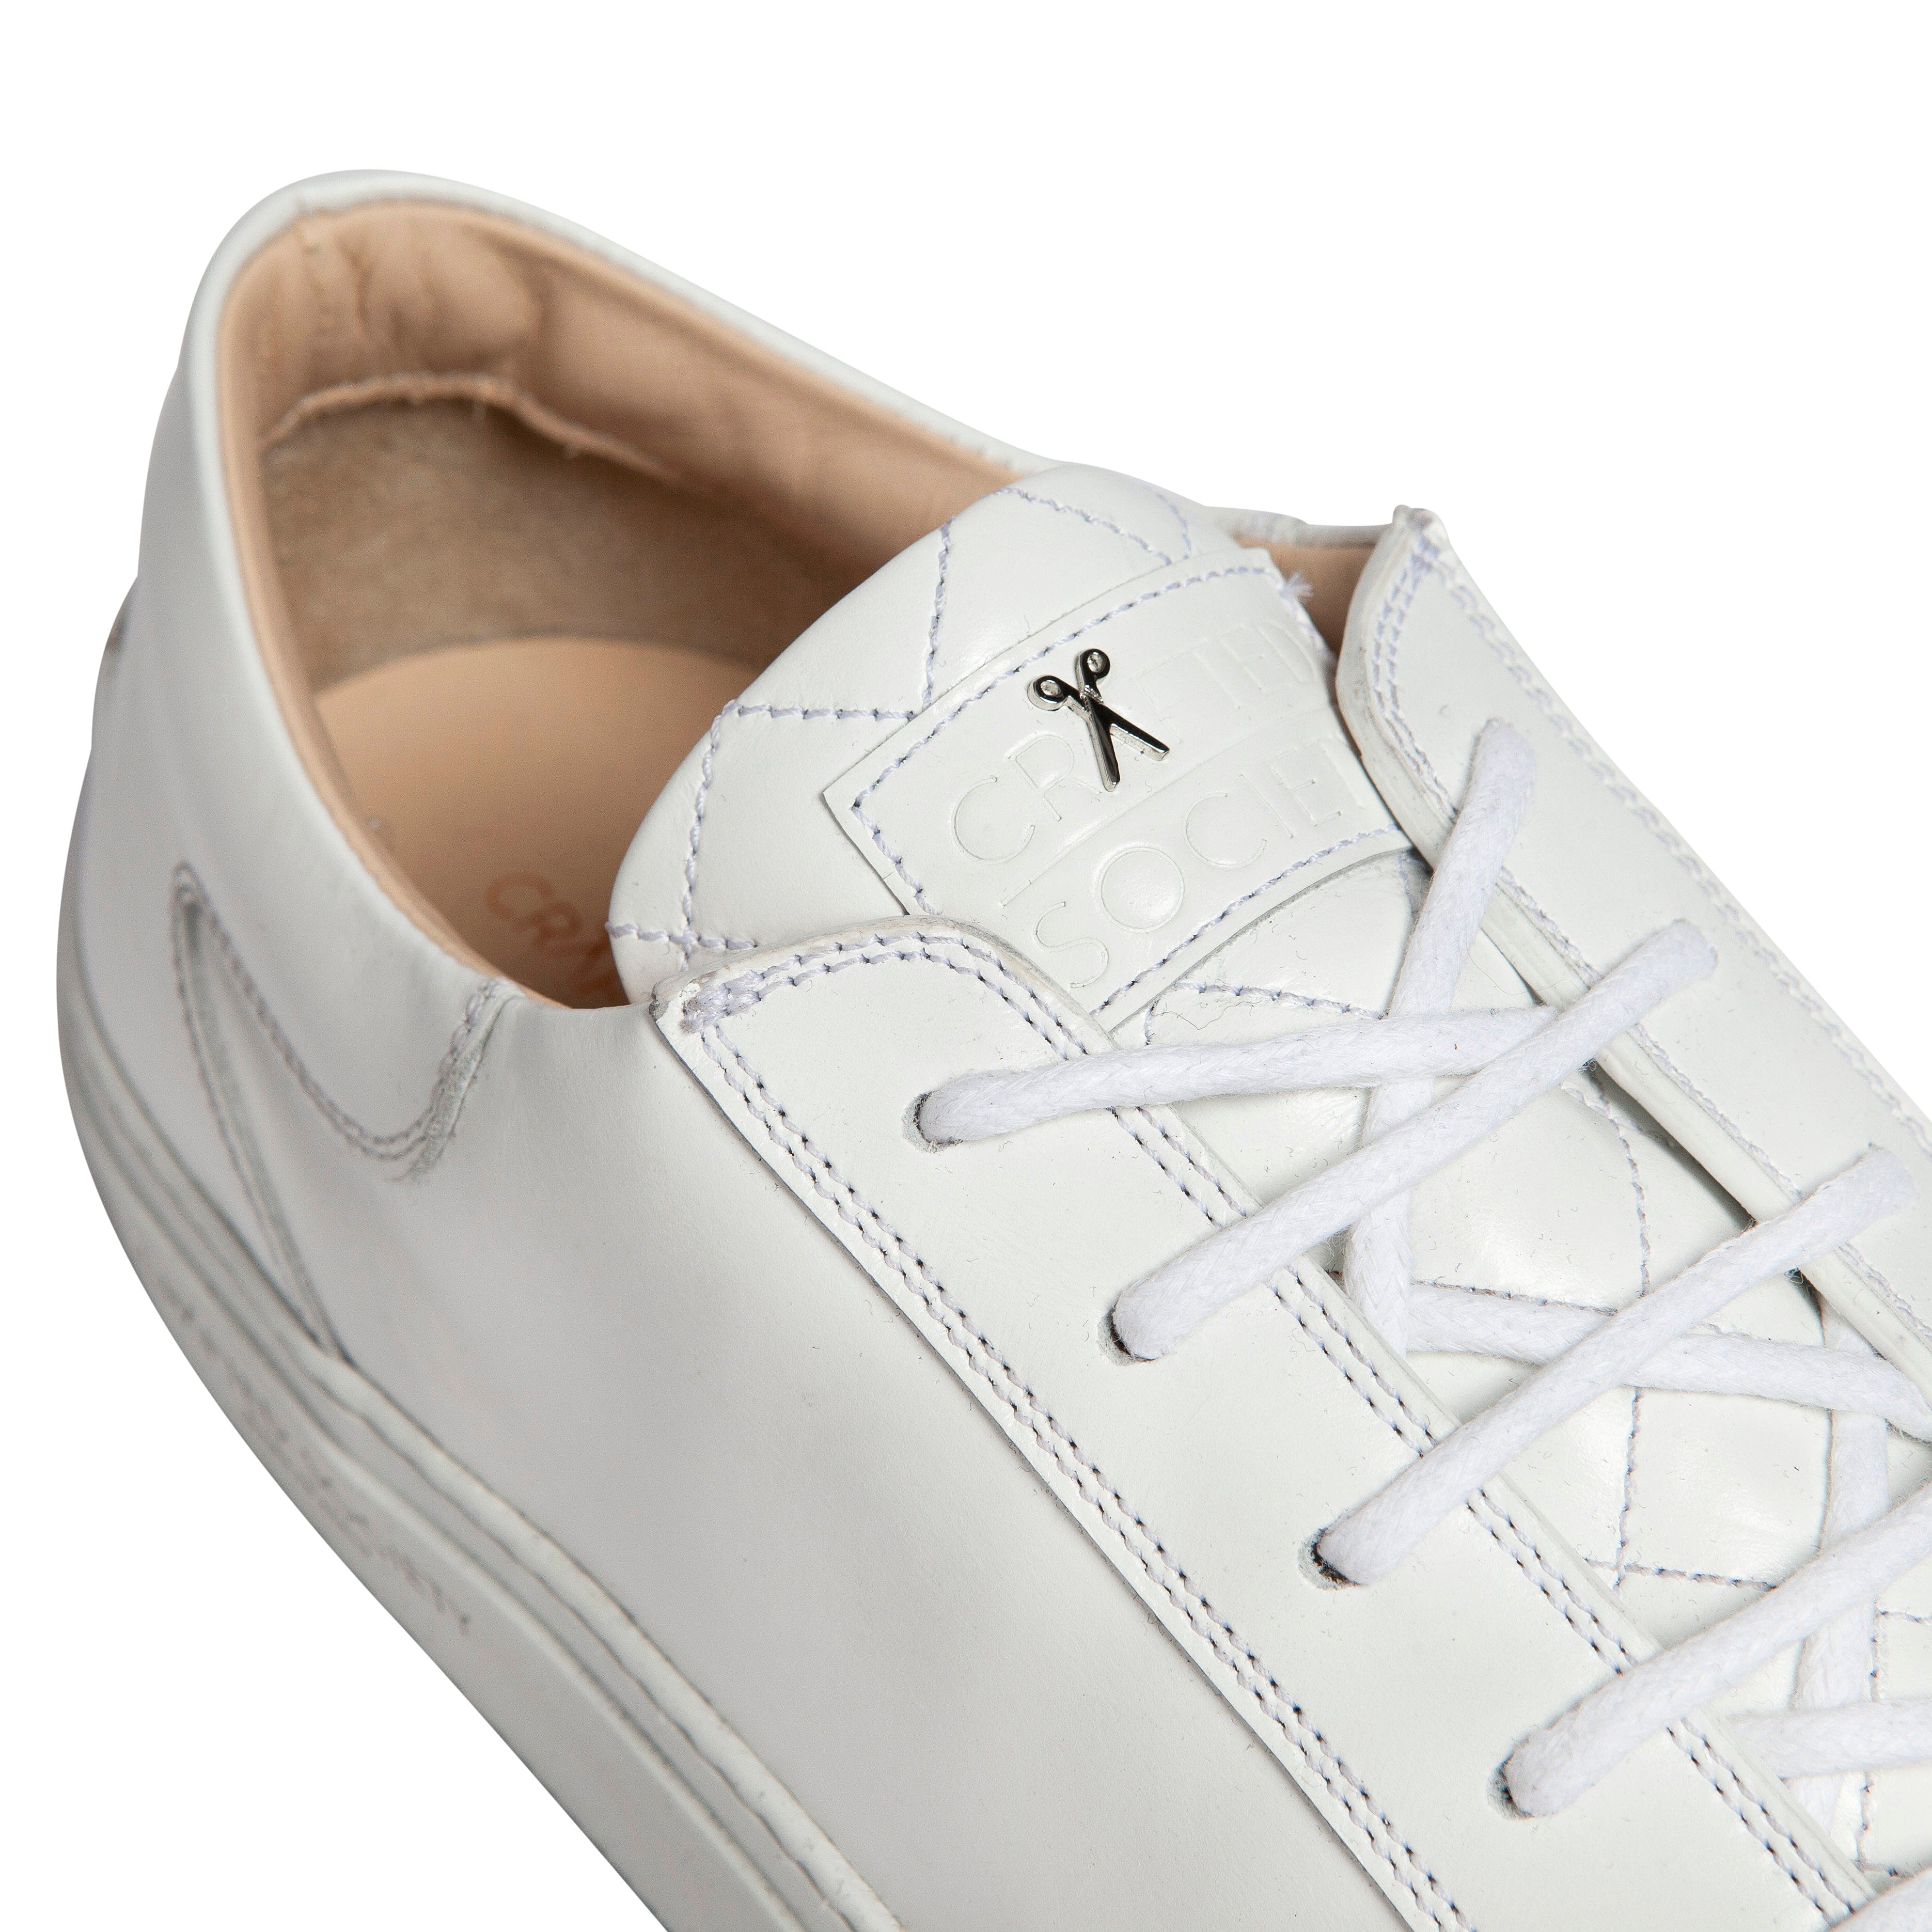 Mario Low Refined Sneaker White Full Grain Leather White Outsole Detailview